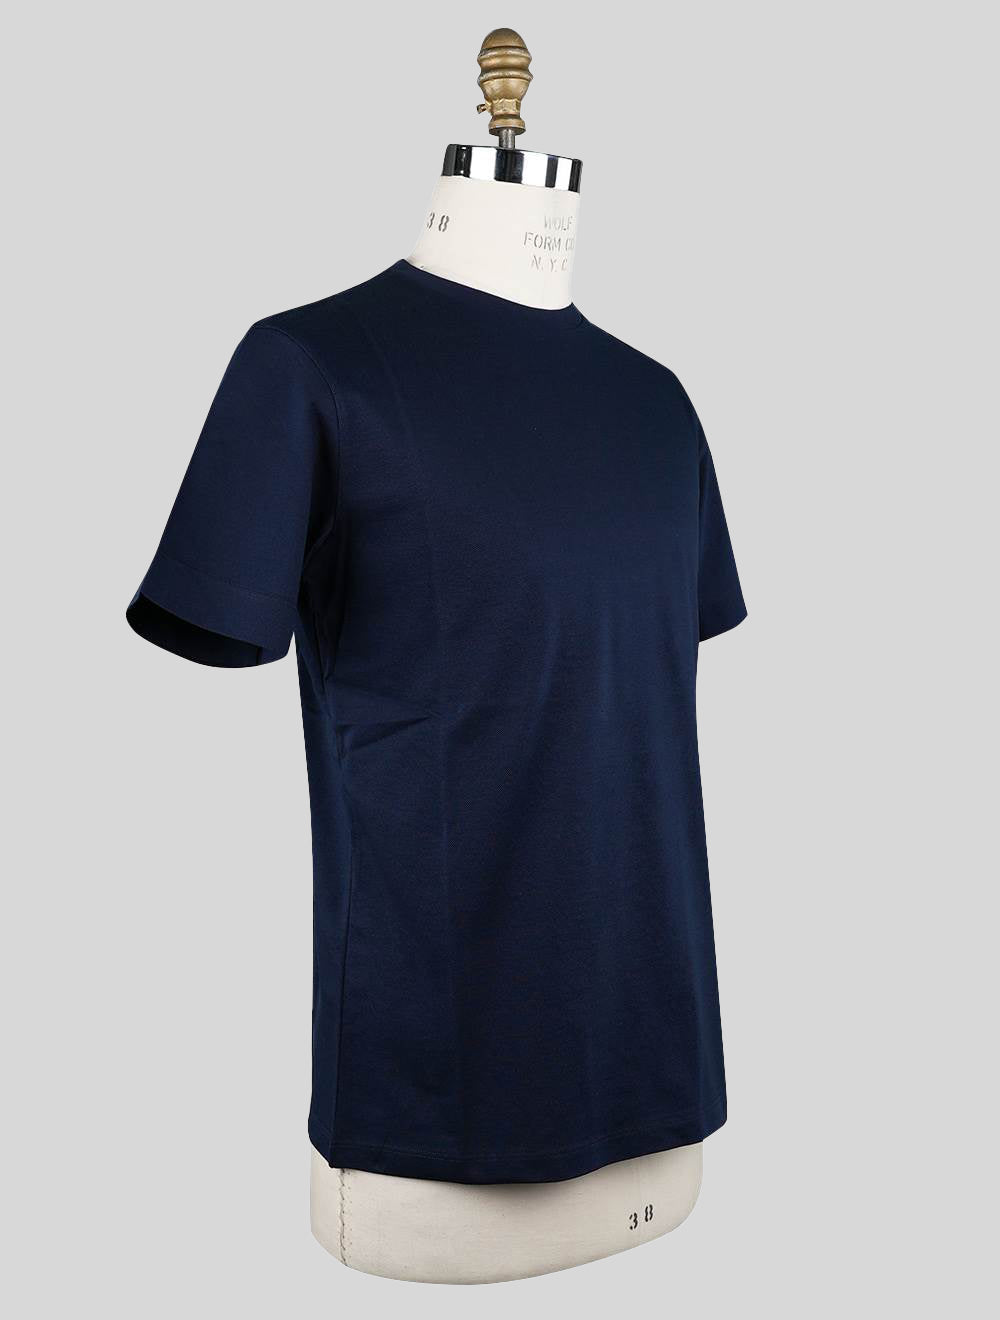 Sartorio Napoli camiseta azul de algodón